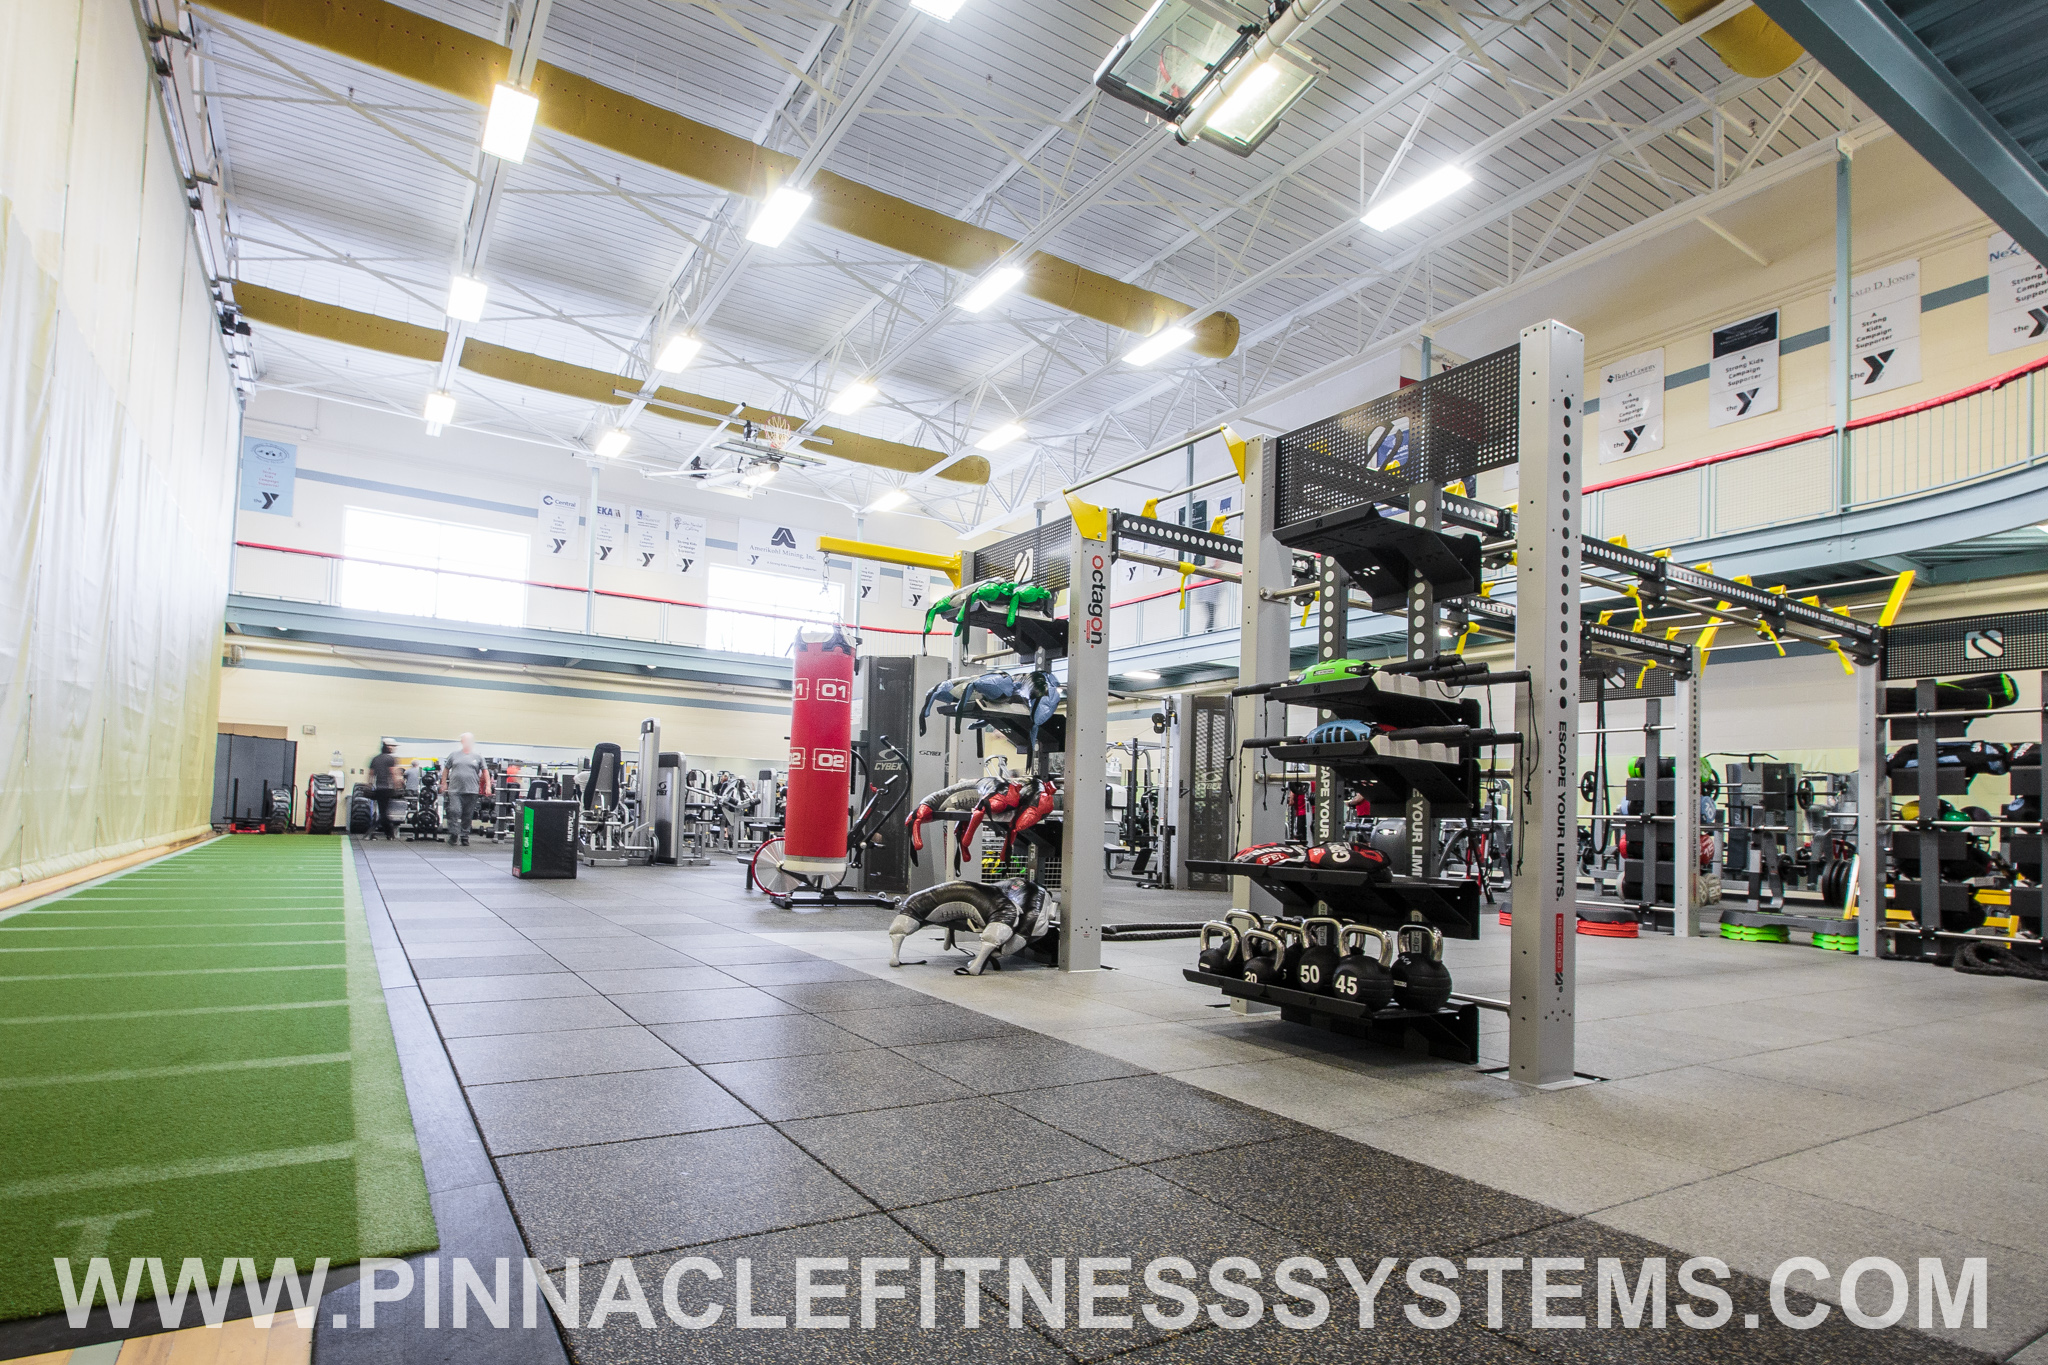 Pinnacle-Fitness-Systems-RoseESchneider-YMCA-2.jpg